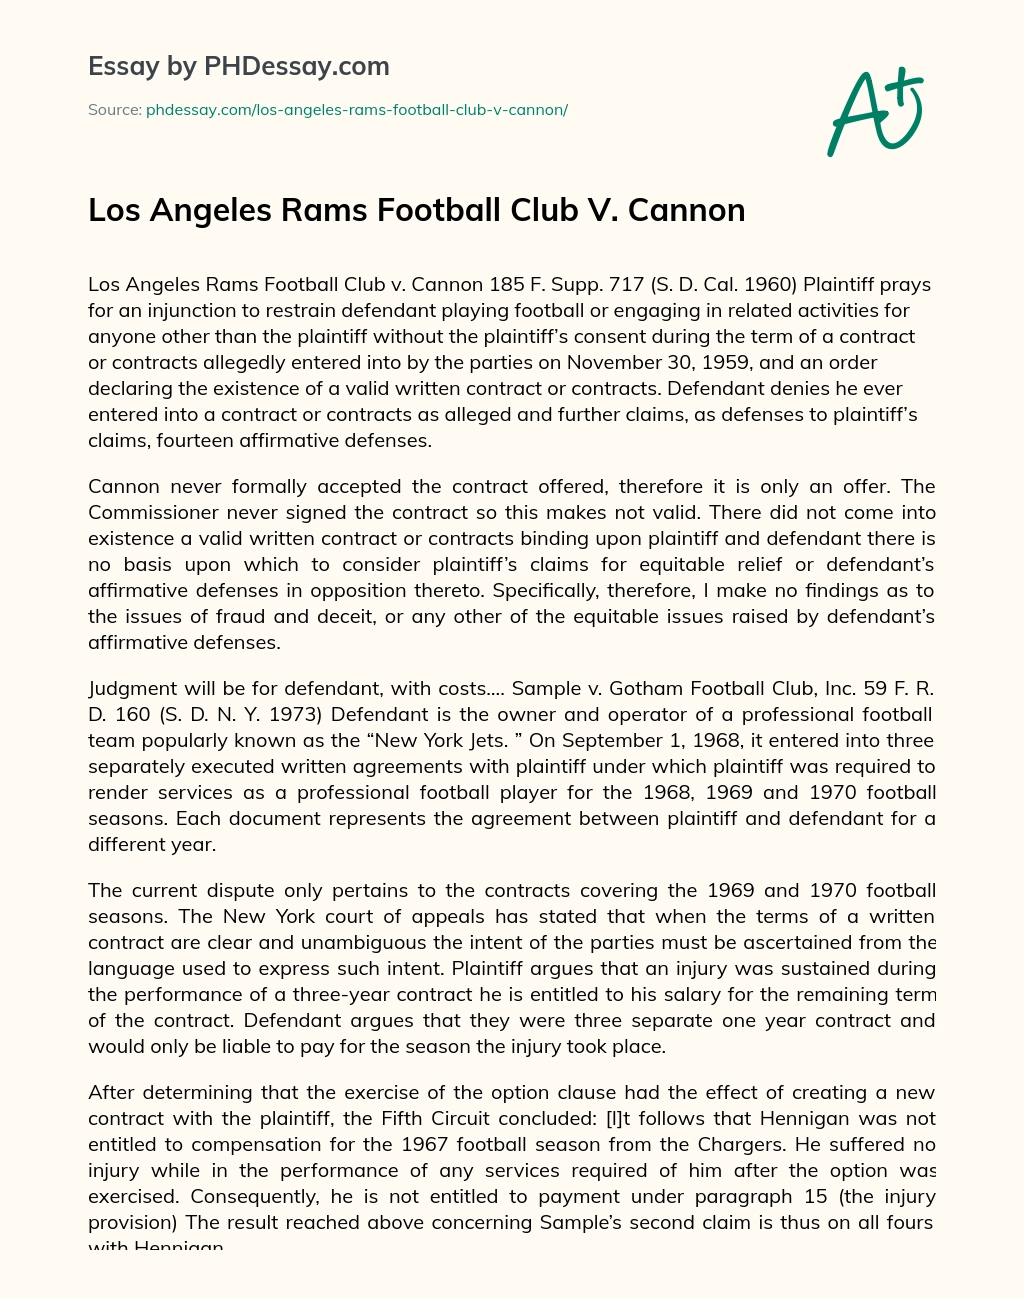 Los Angeles Rams Football Club V. Cannon essay